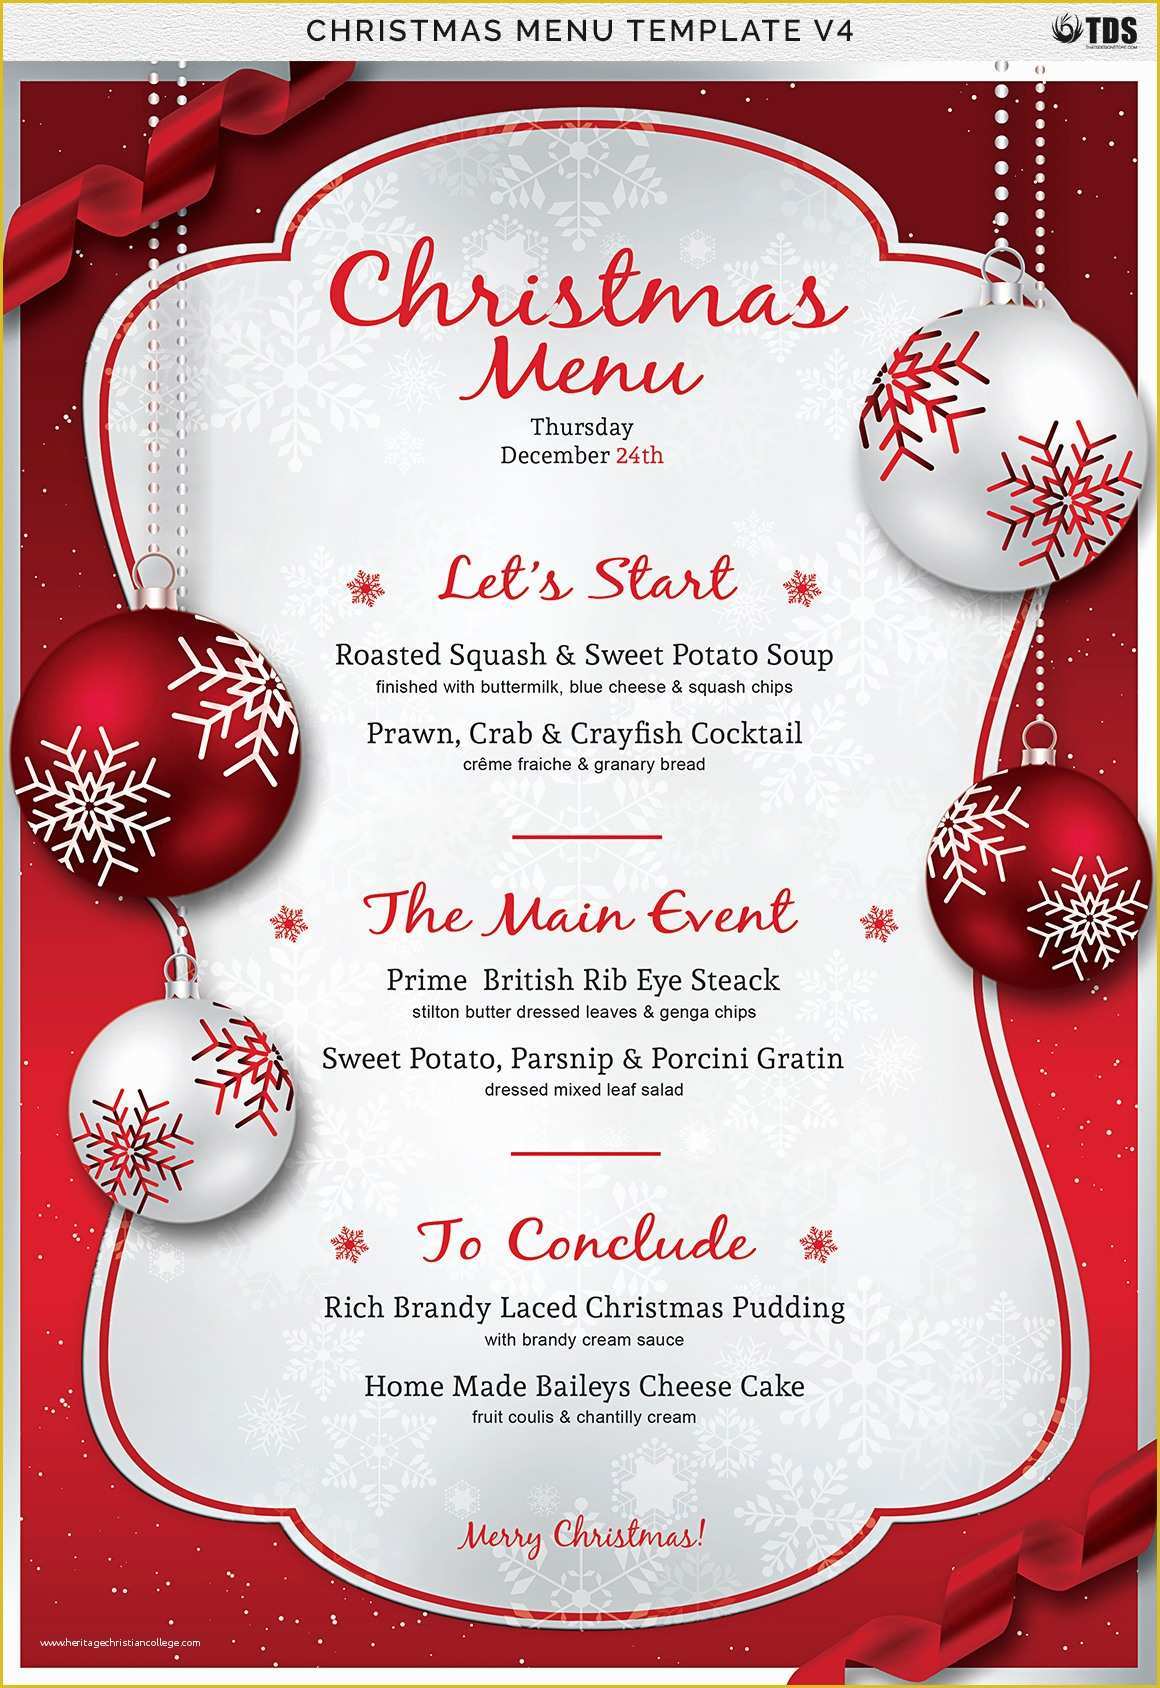 Free Printable Holiday Menu Template Of Christmas Menu Template V4 On Behance